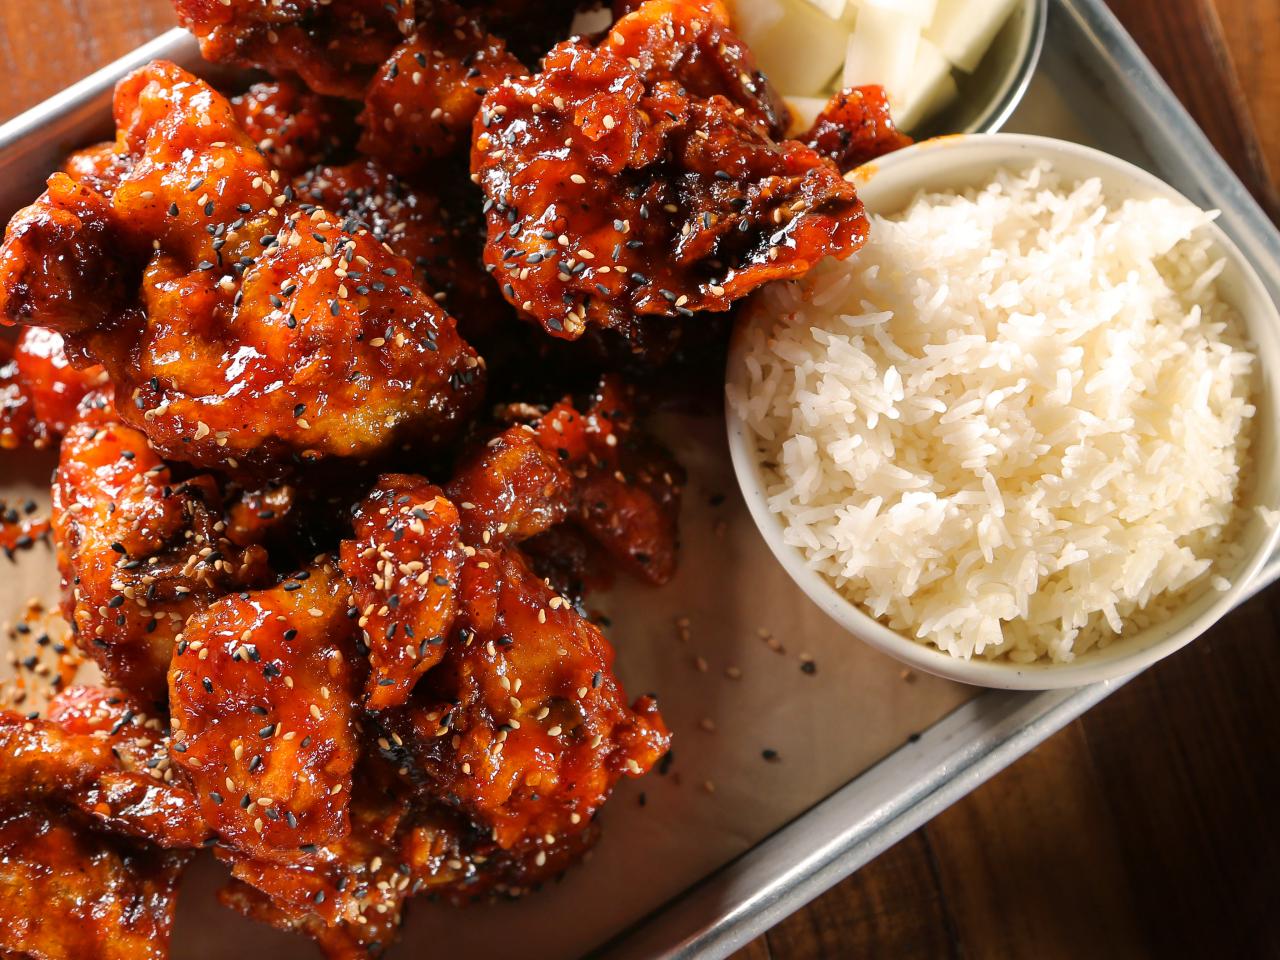 Air Fryer Korean Fried Chicken Recipe (Yangnyeom Chicken)